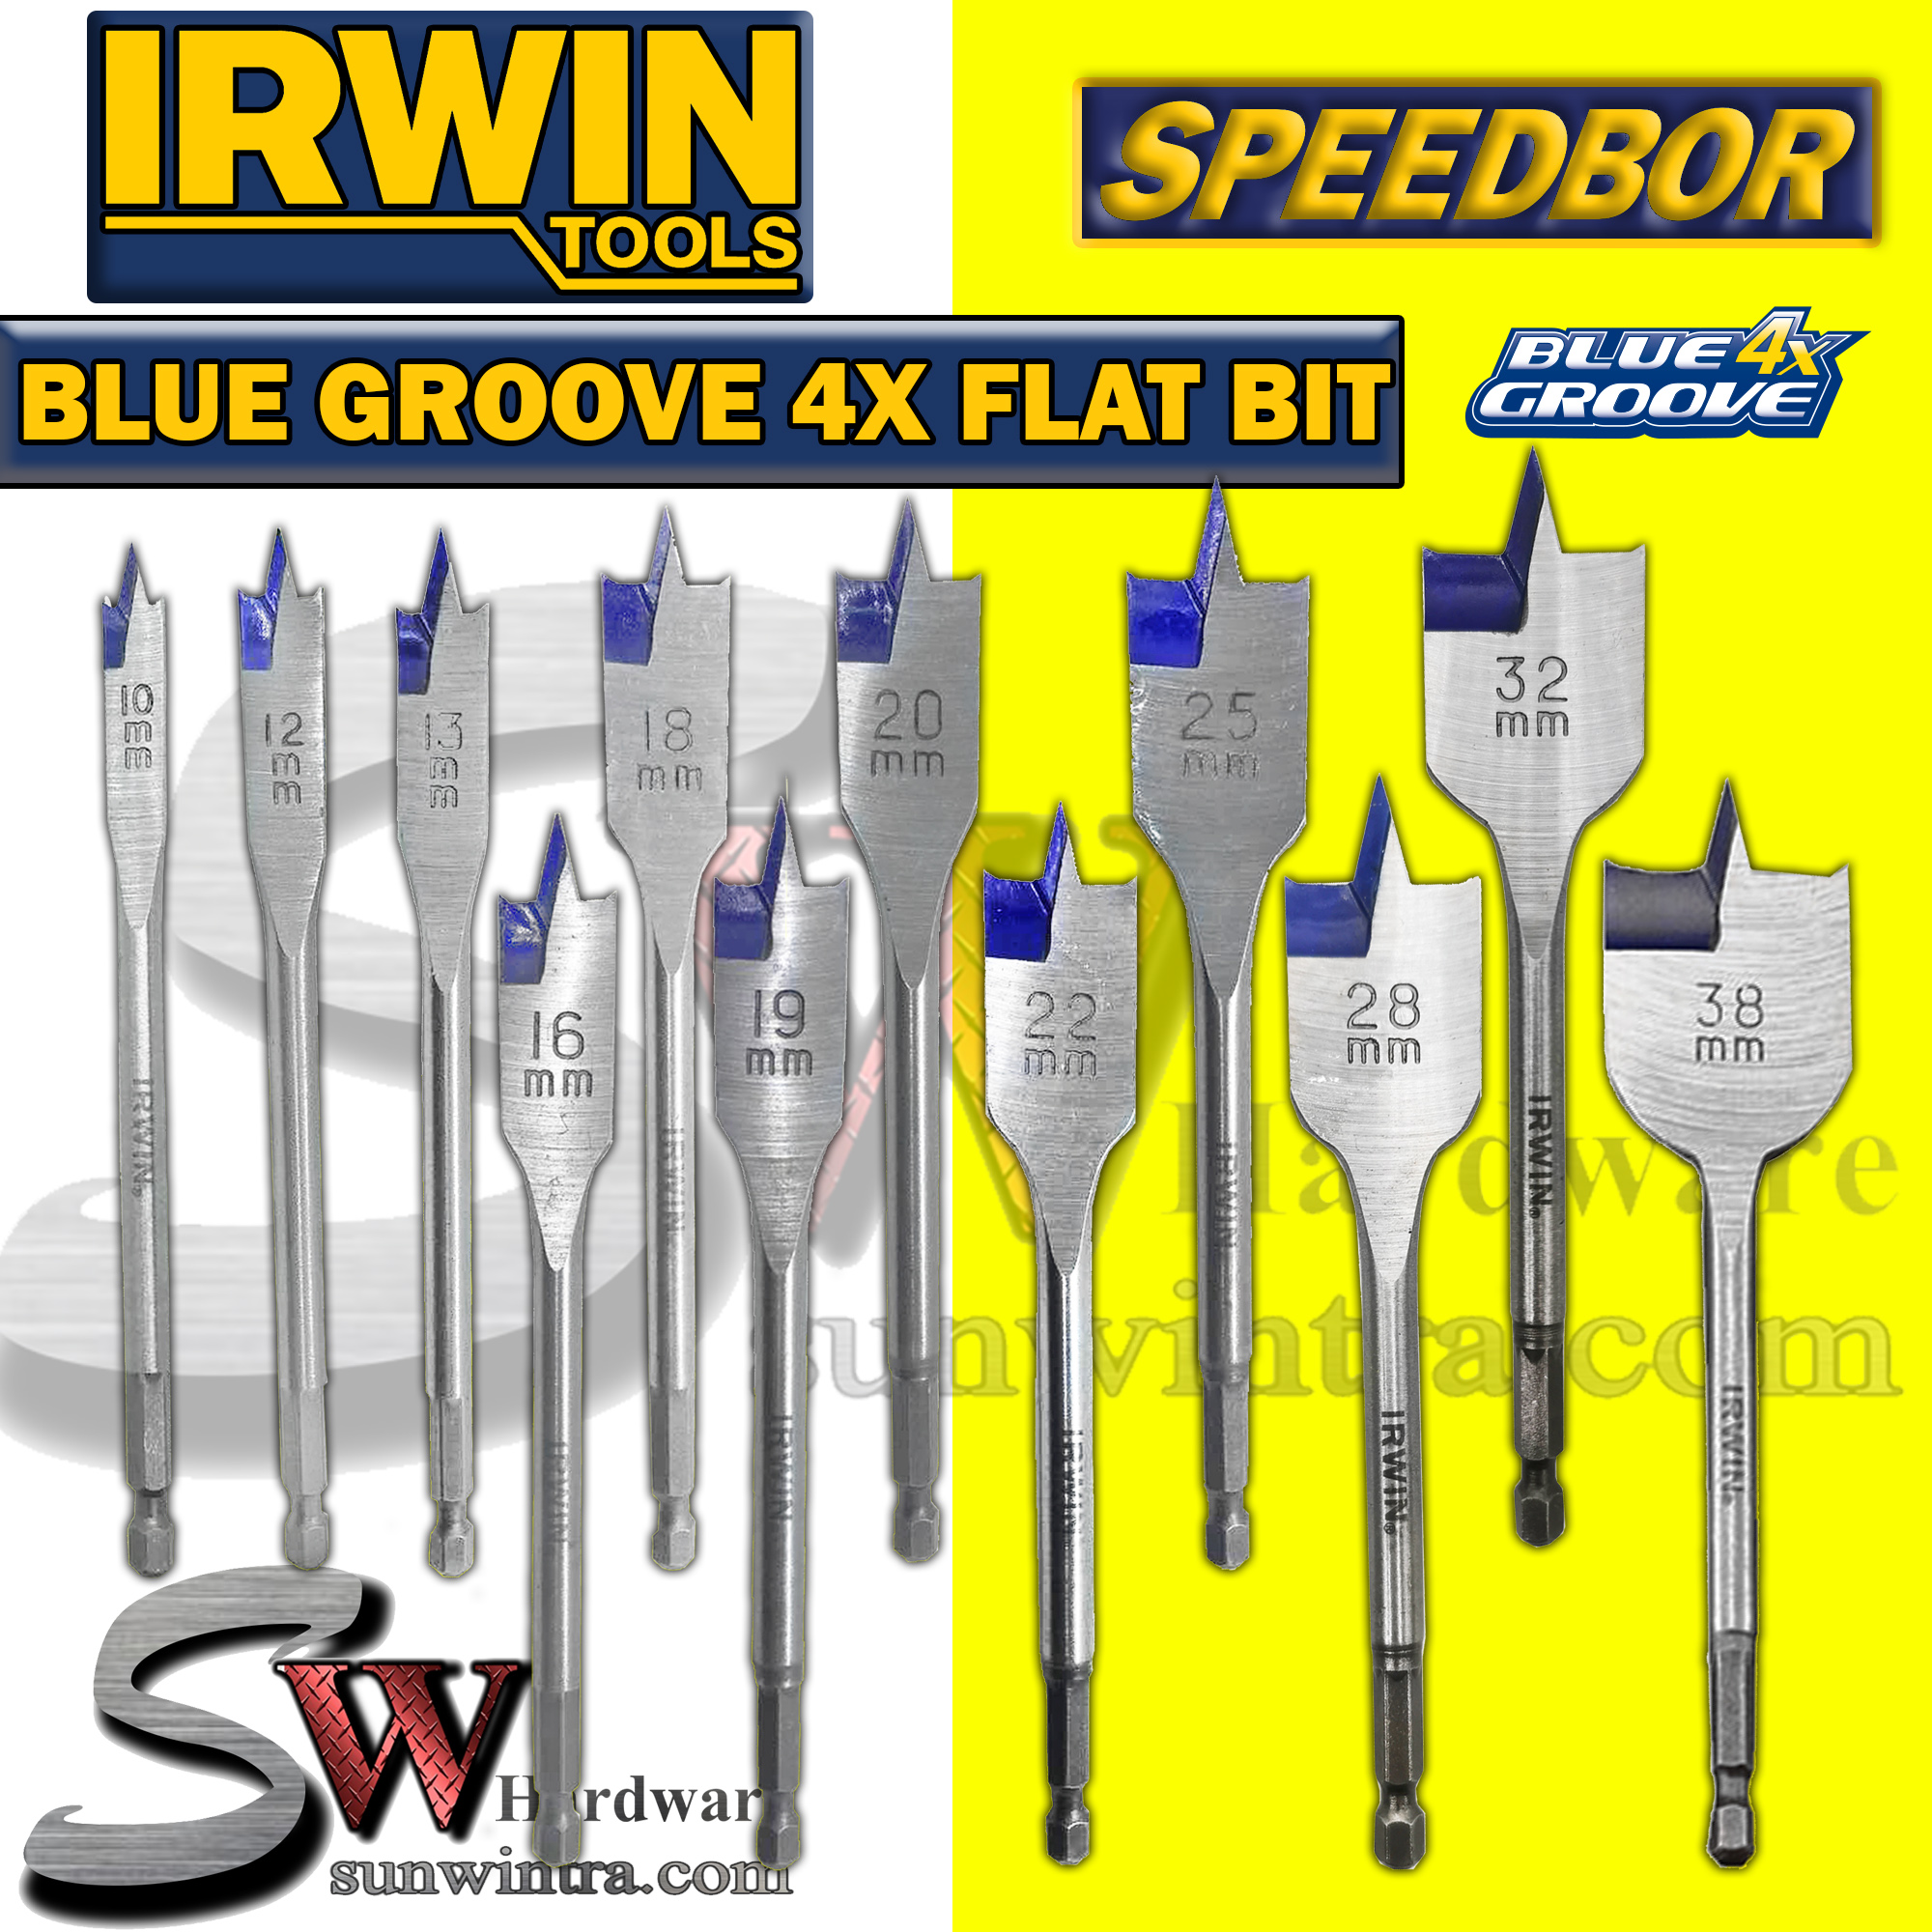 IRWIN Irwin 16mm Speedbor Spade Drill Bit 